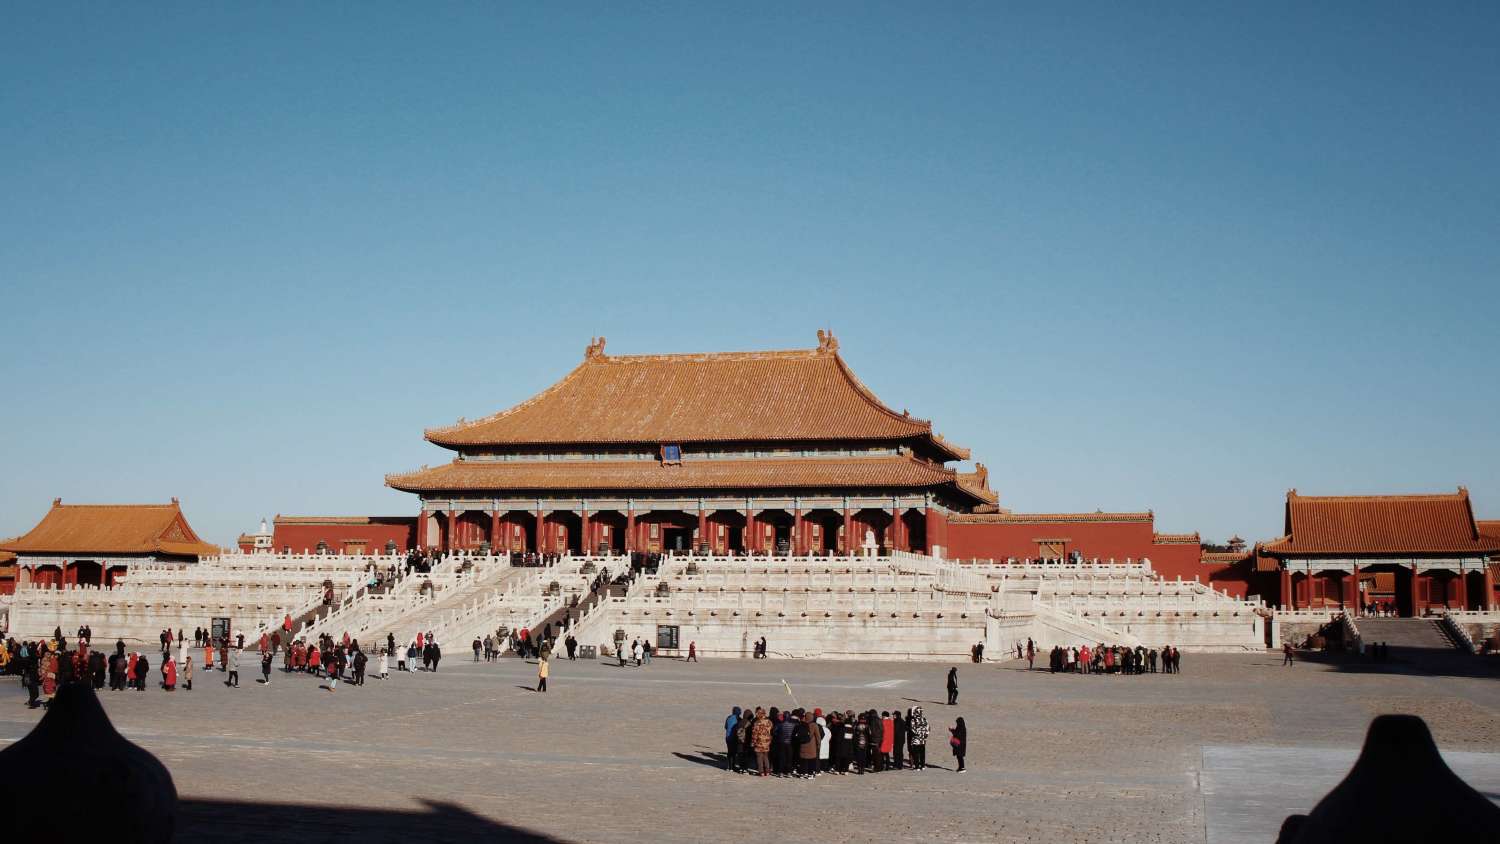 View of Forbidden City